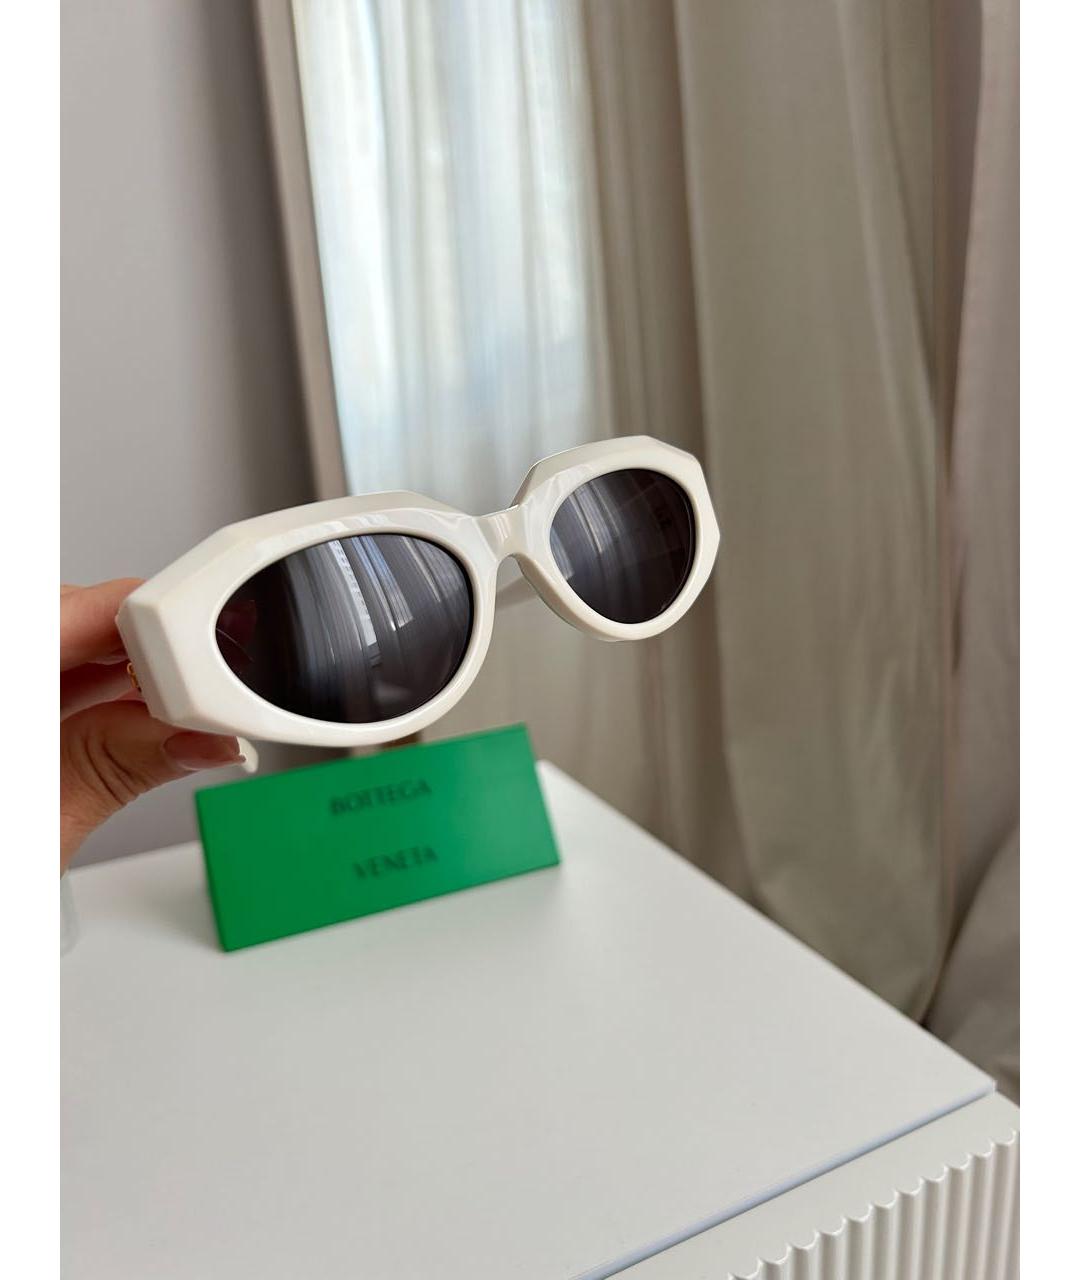 BOTTEGA VENETA Белые пластиковые солнцезащитные очки, фото 3